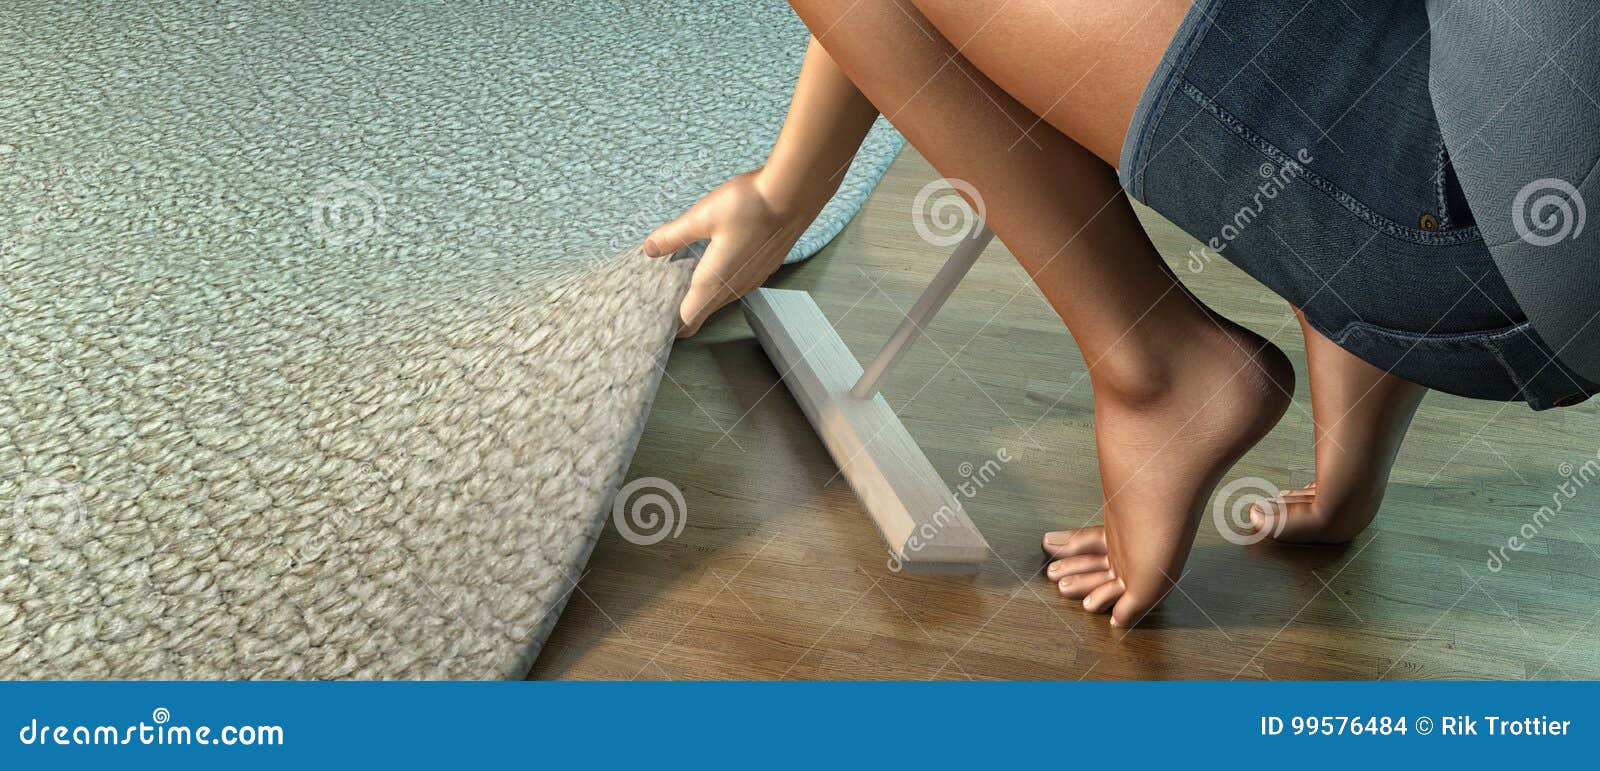 Swept under the carpet stock photo. Image of feet, broom 99576484